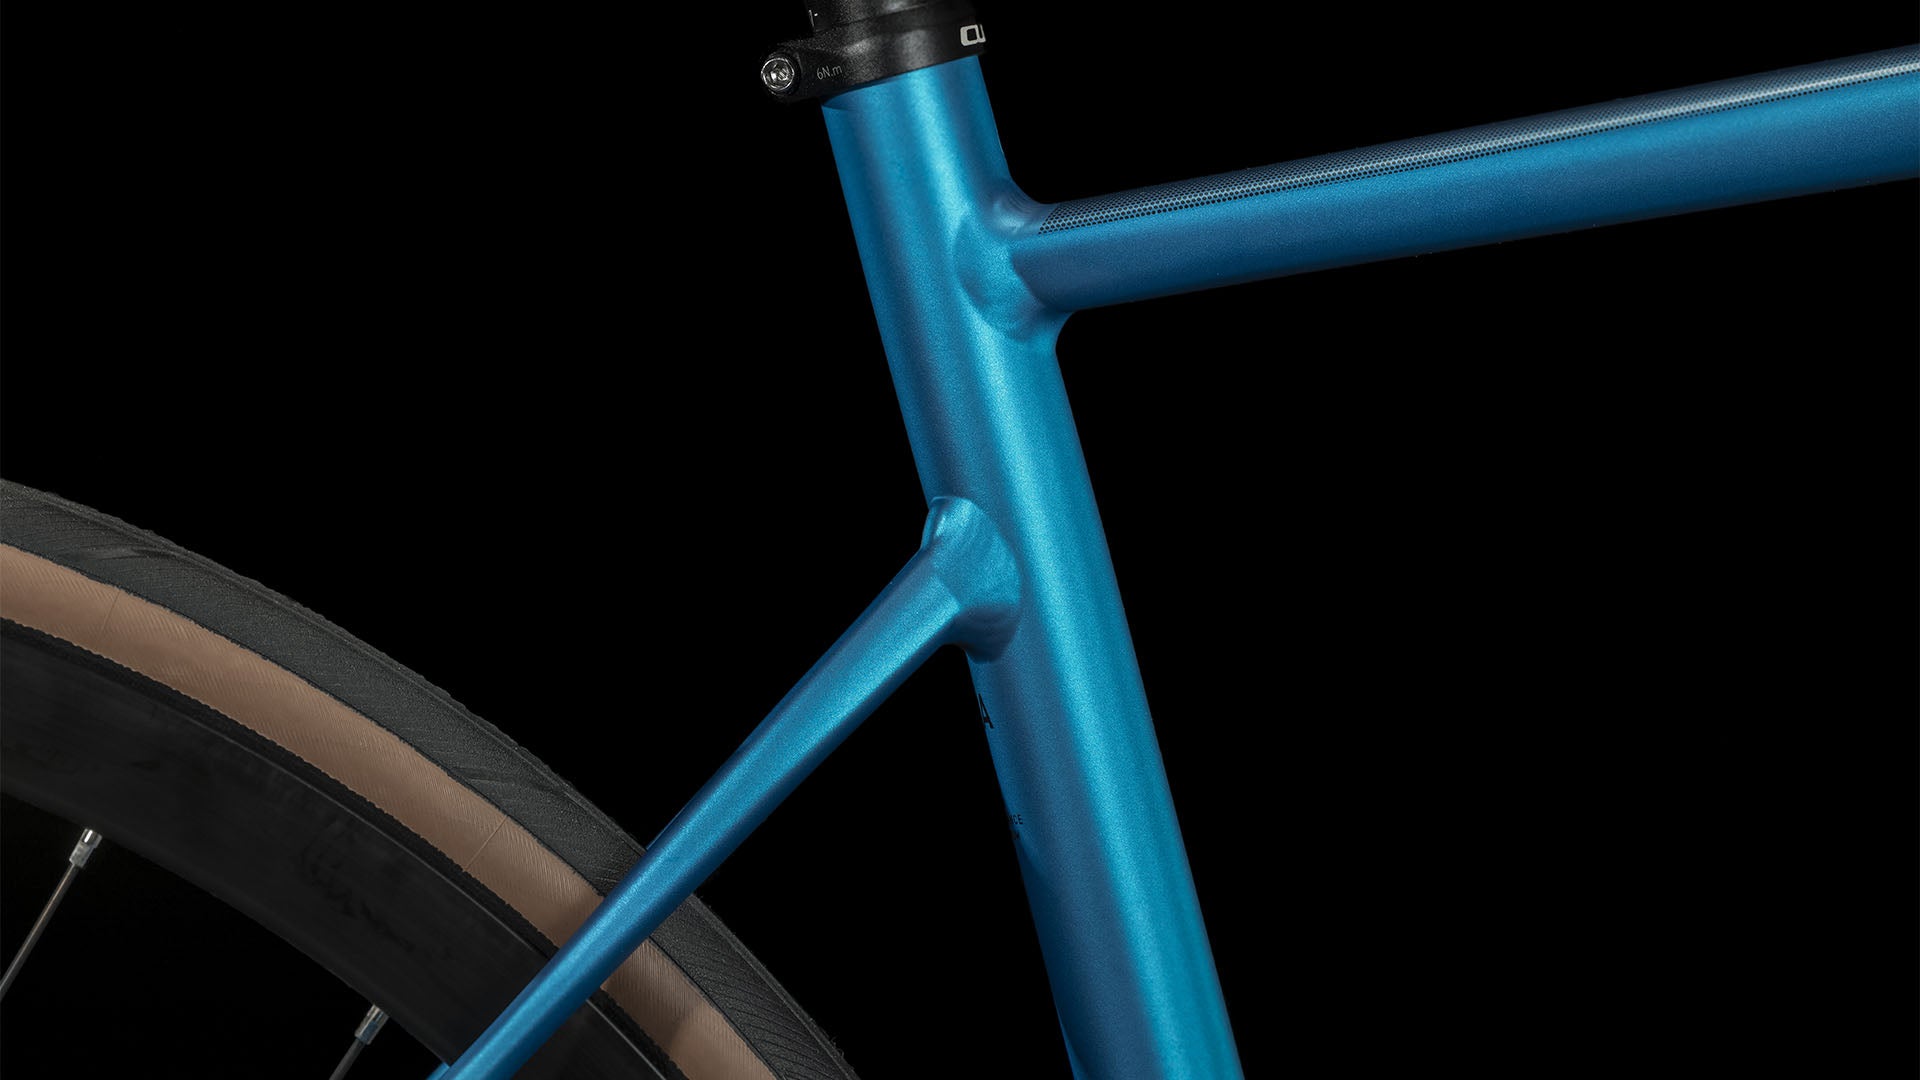 Bicicleta Ruta Attain Race Azul Aro 700c